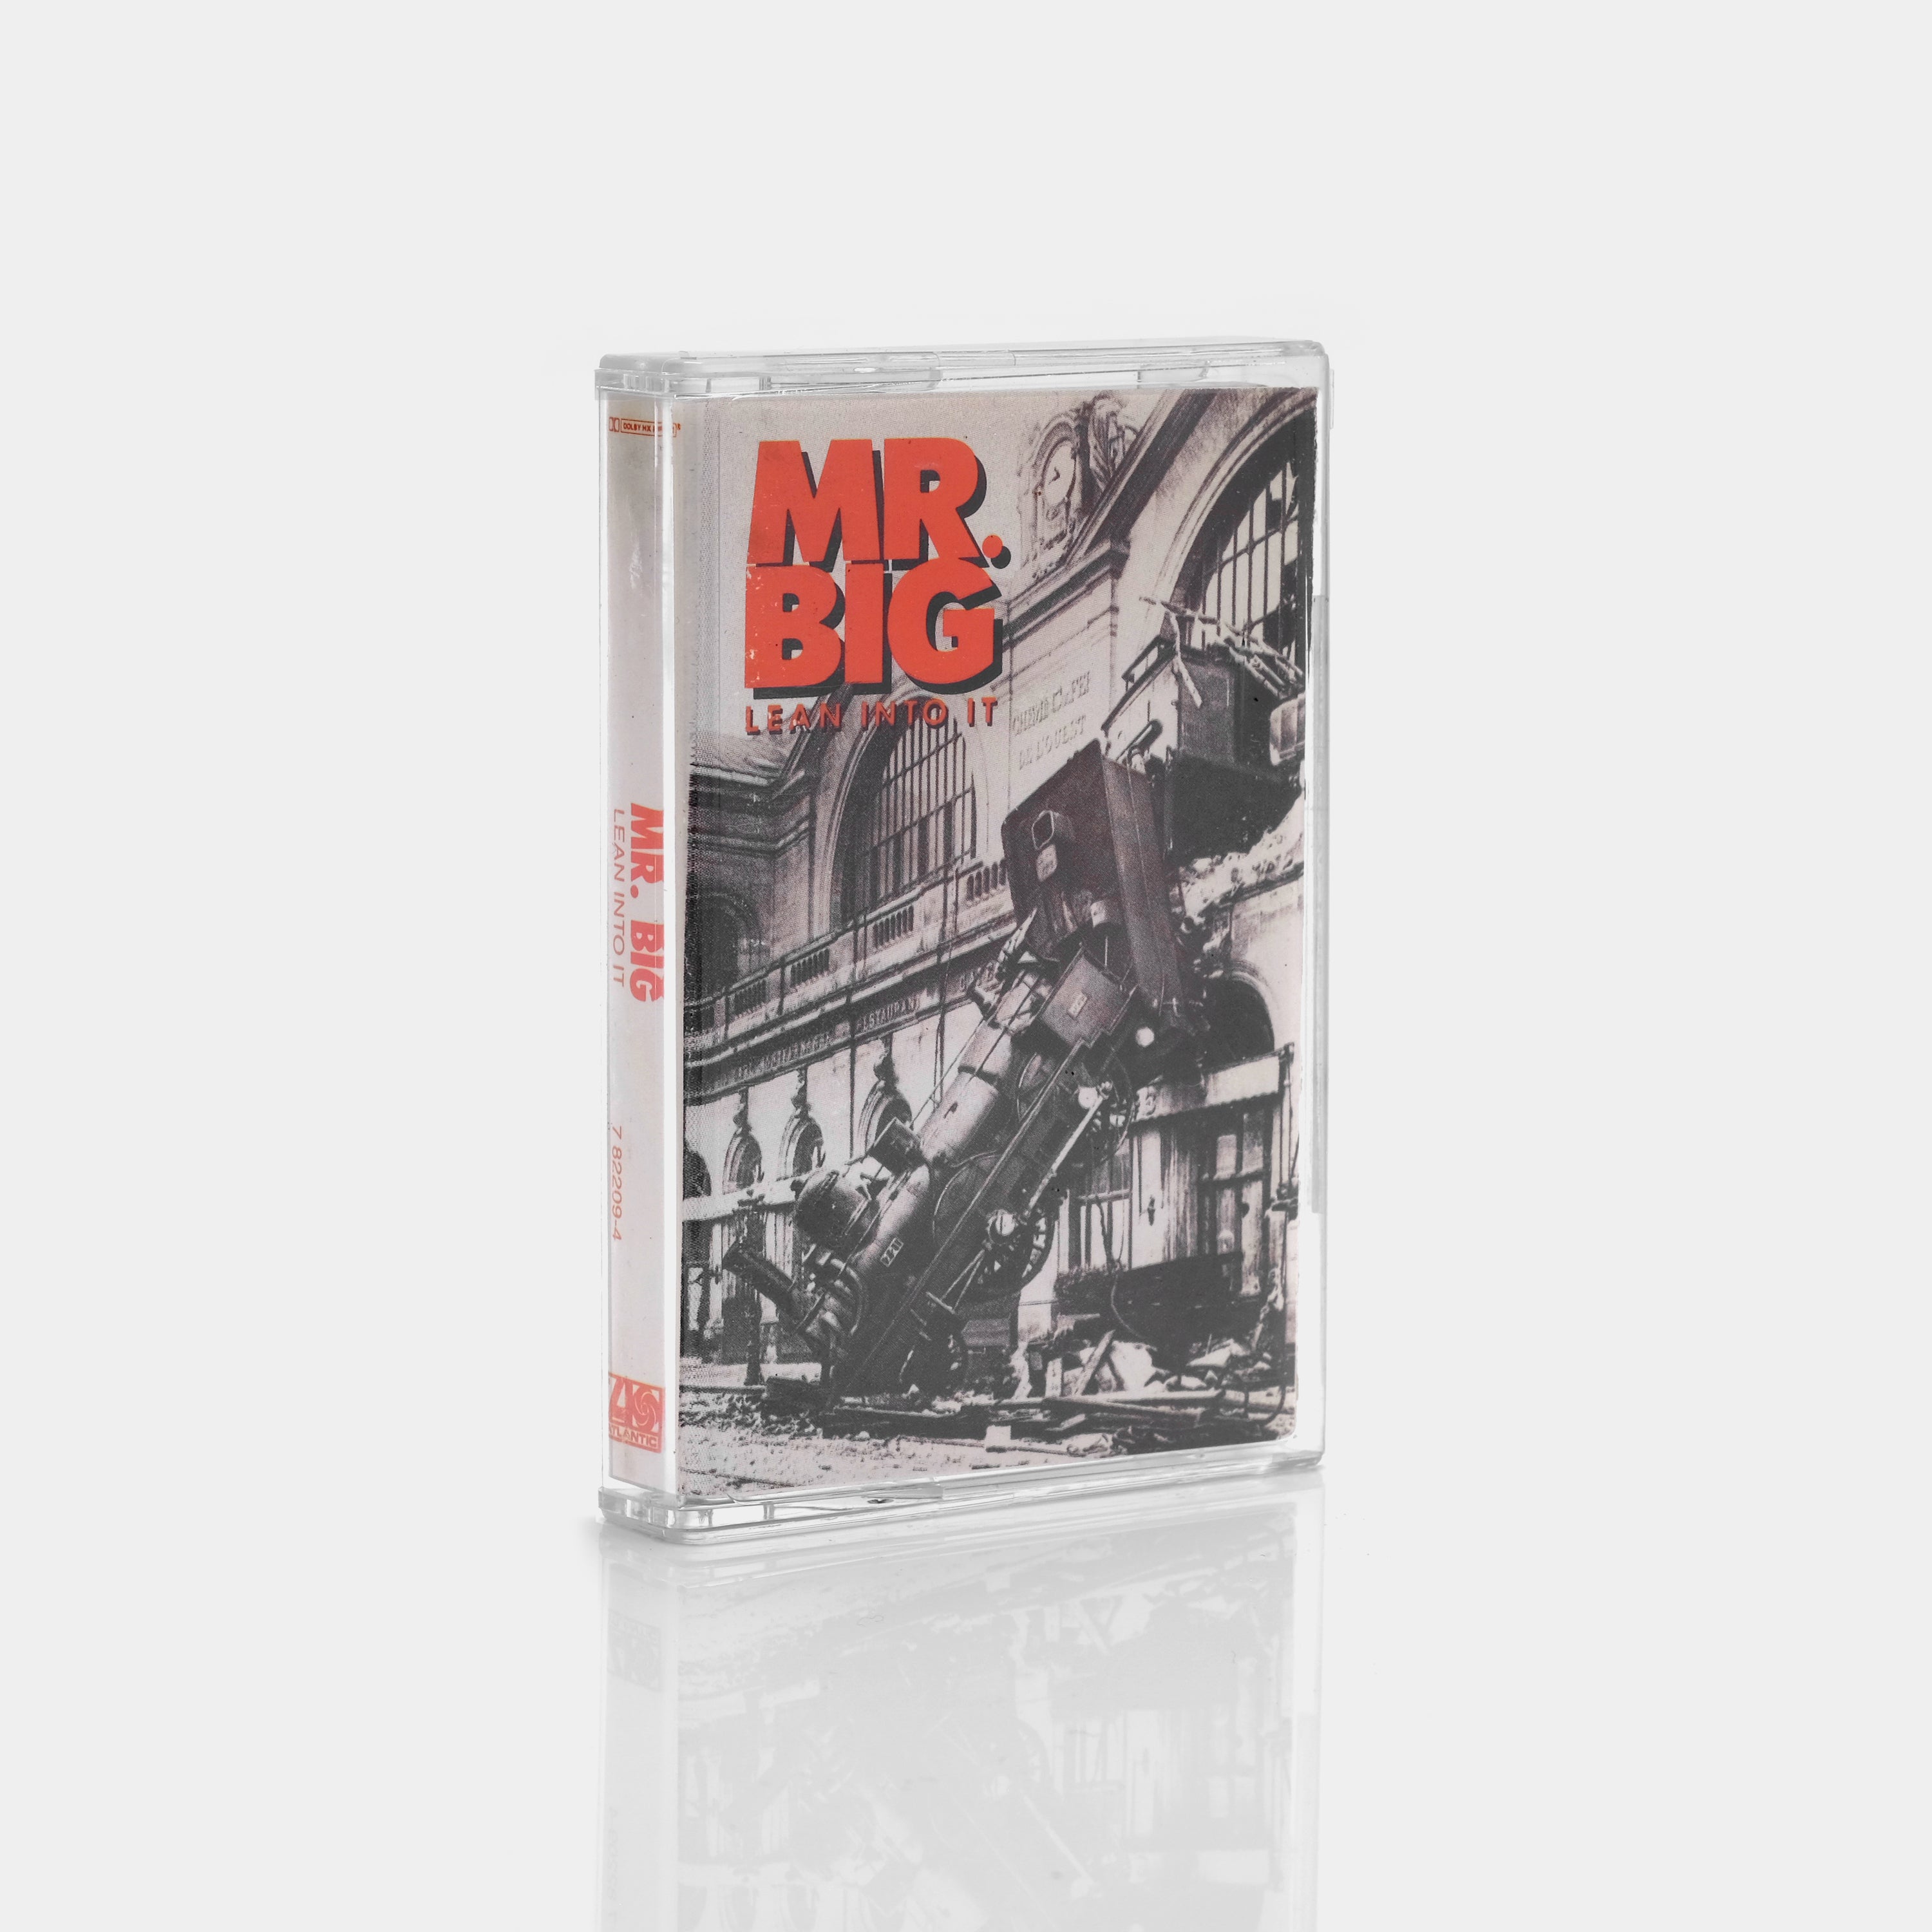 Mr. Big - Lean Into It Cassette Tape